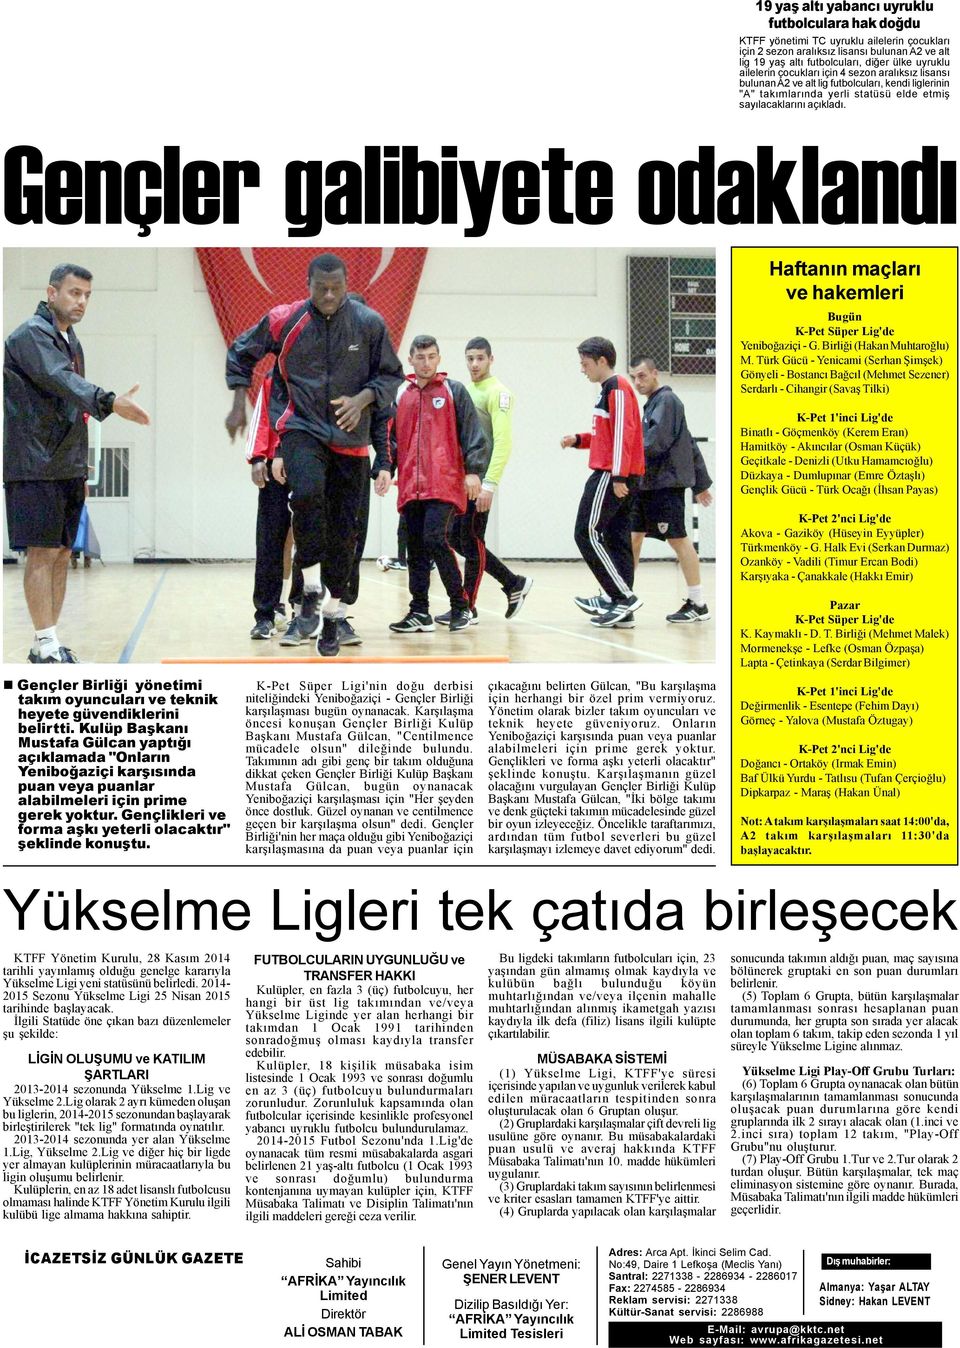 Gençler galibiyete odaklandý Haftanýn maçlarý ve hakemleri Bugün K-Pet Süper Lig'de Yeniboðaziçi - G. Birliði (Hakan Muhtaroðlu) M.